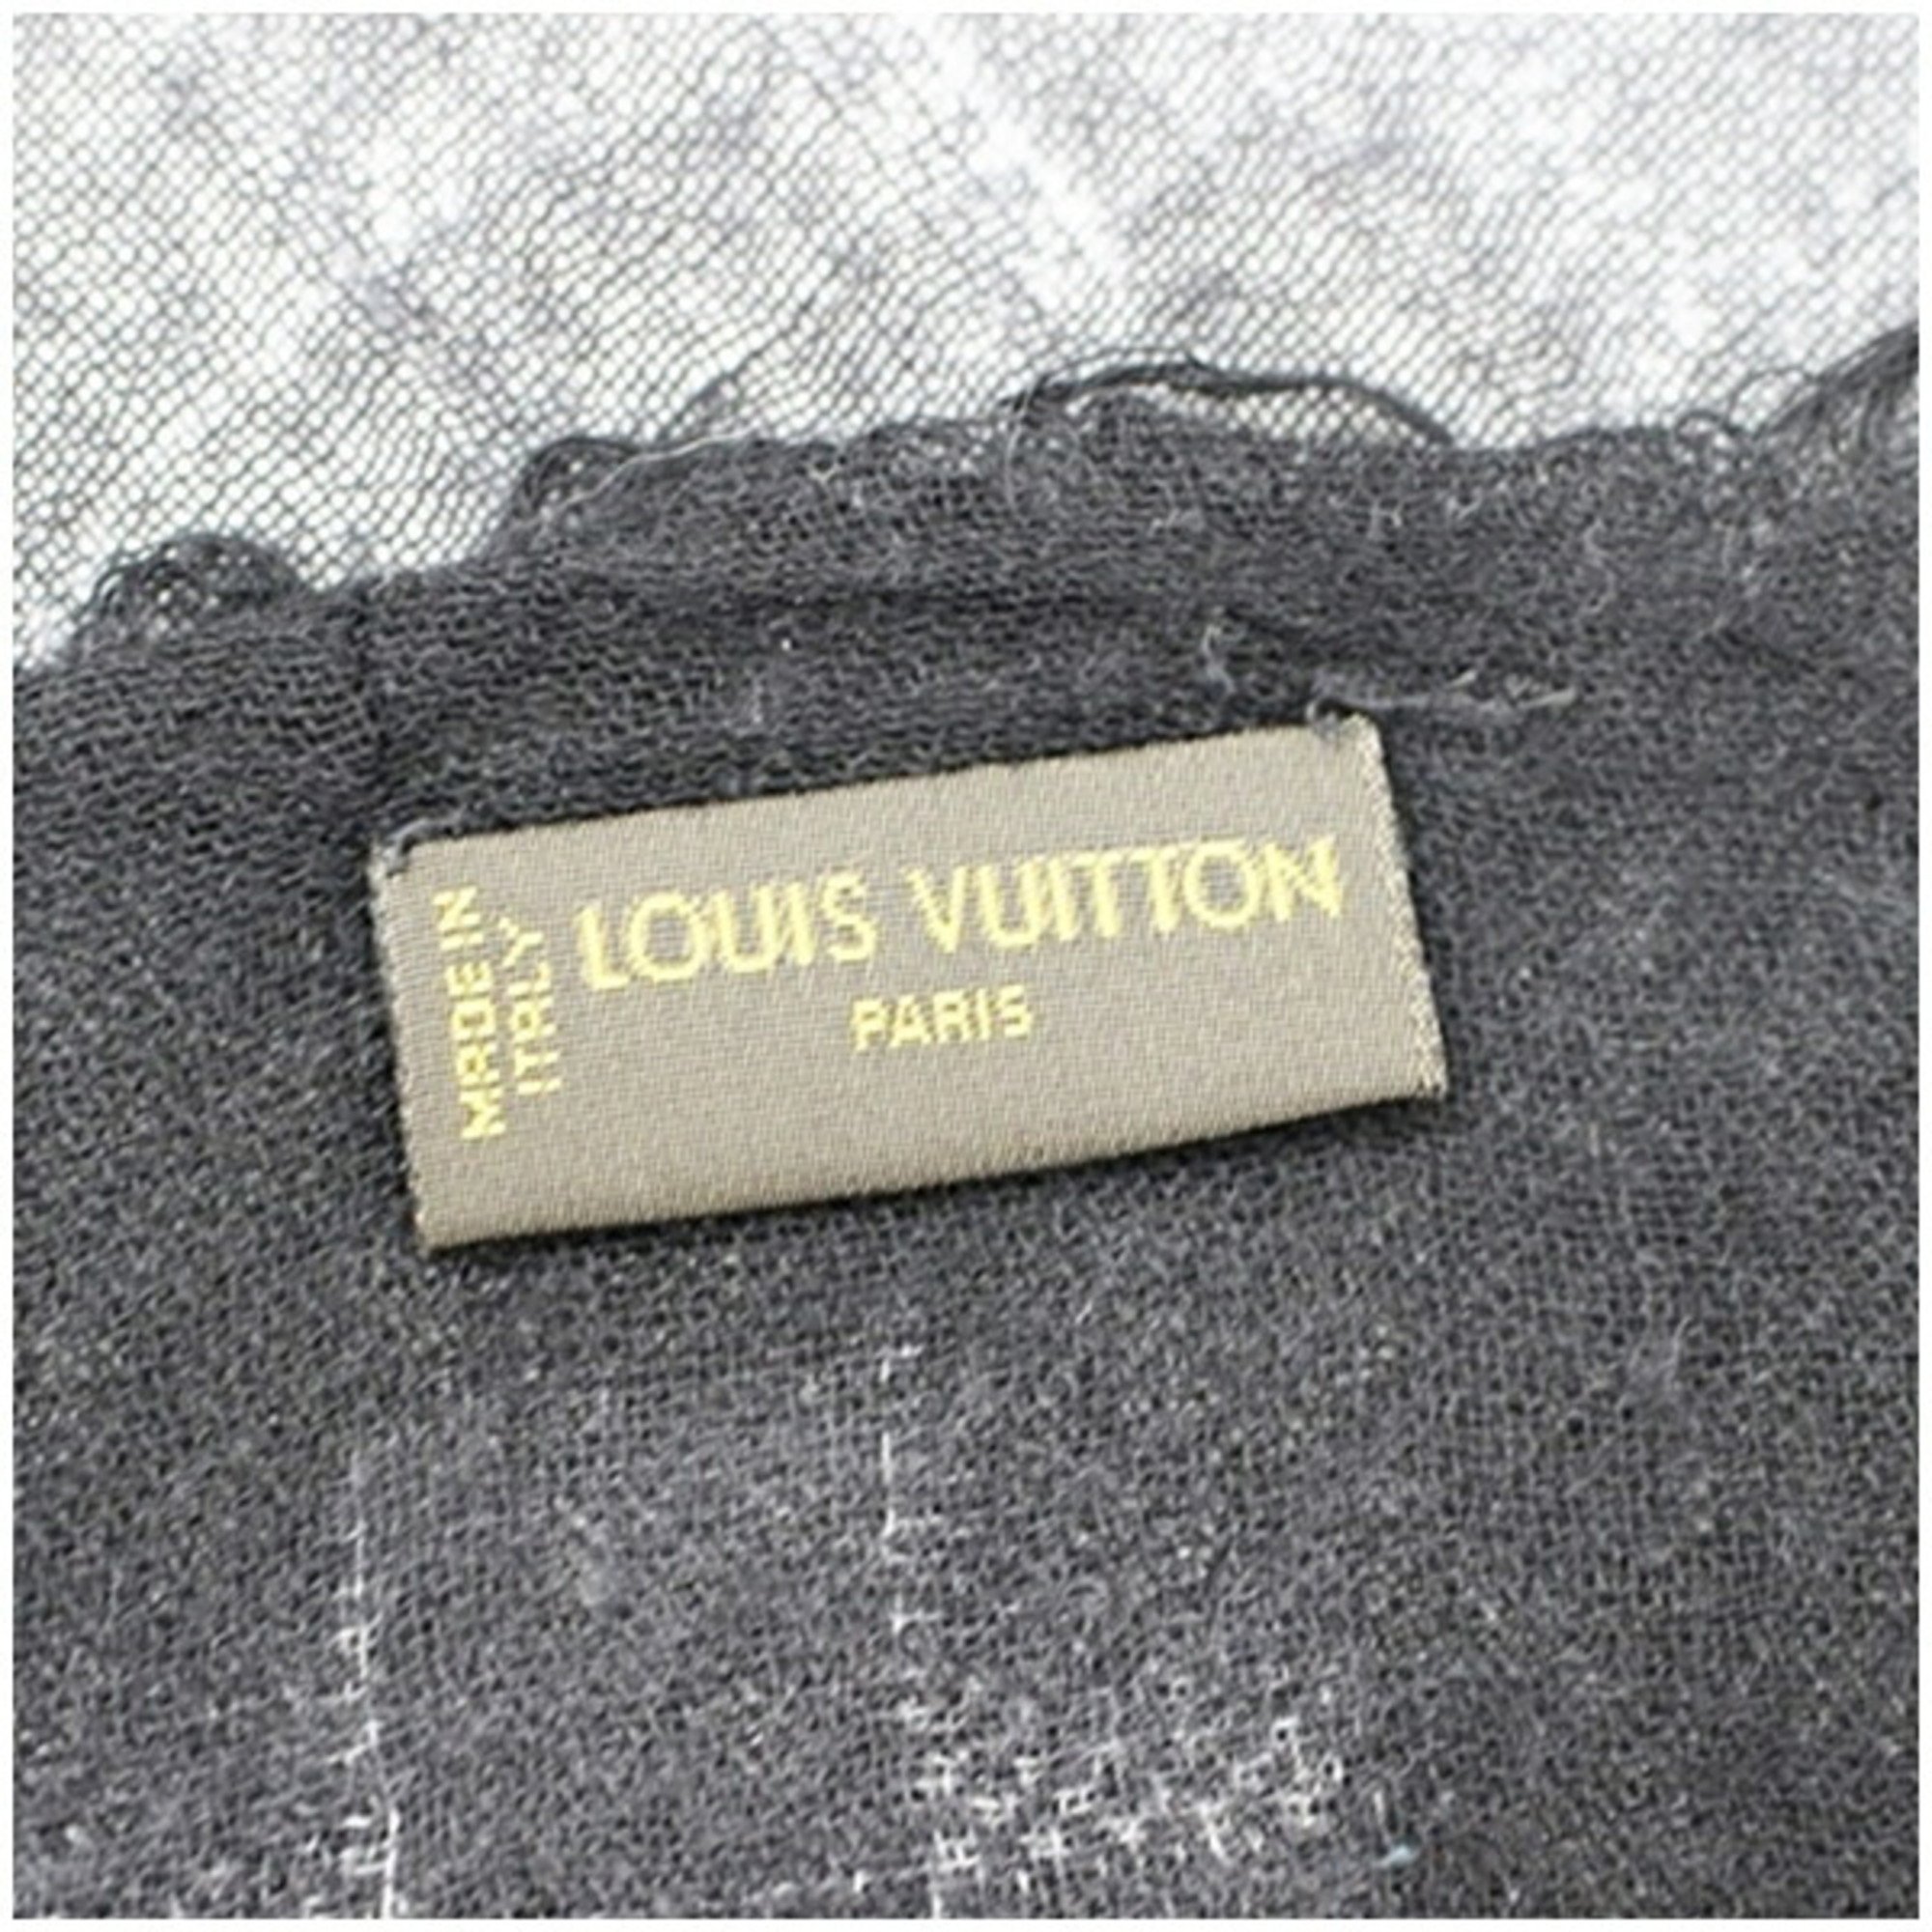 Louis Vuitton Shawl Large Cashmere x Silk Black 401910 Women's